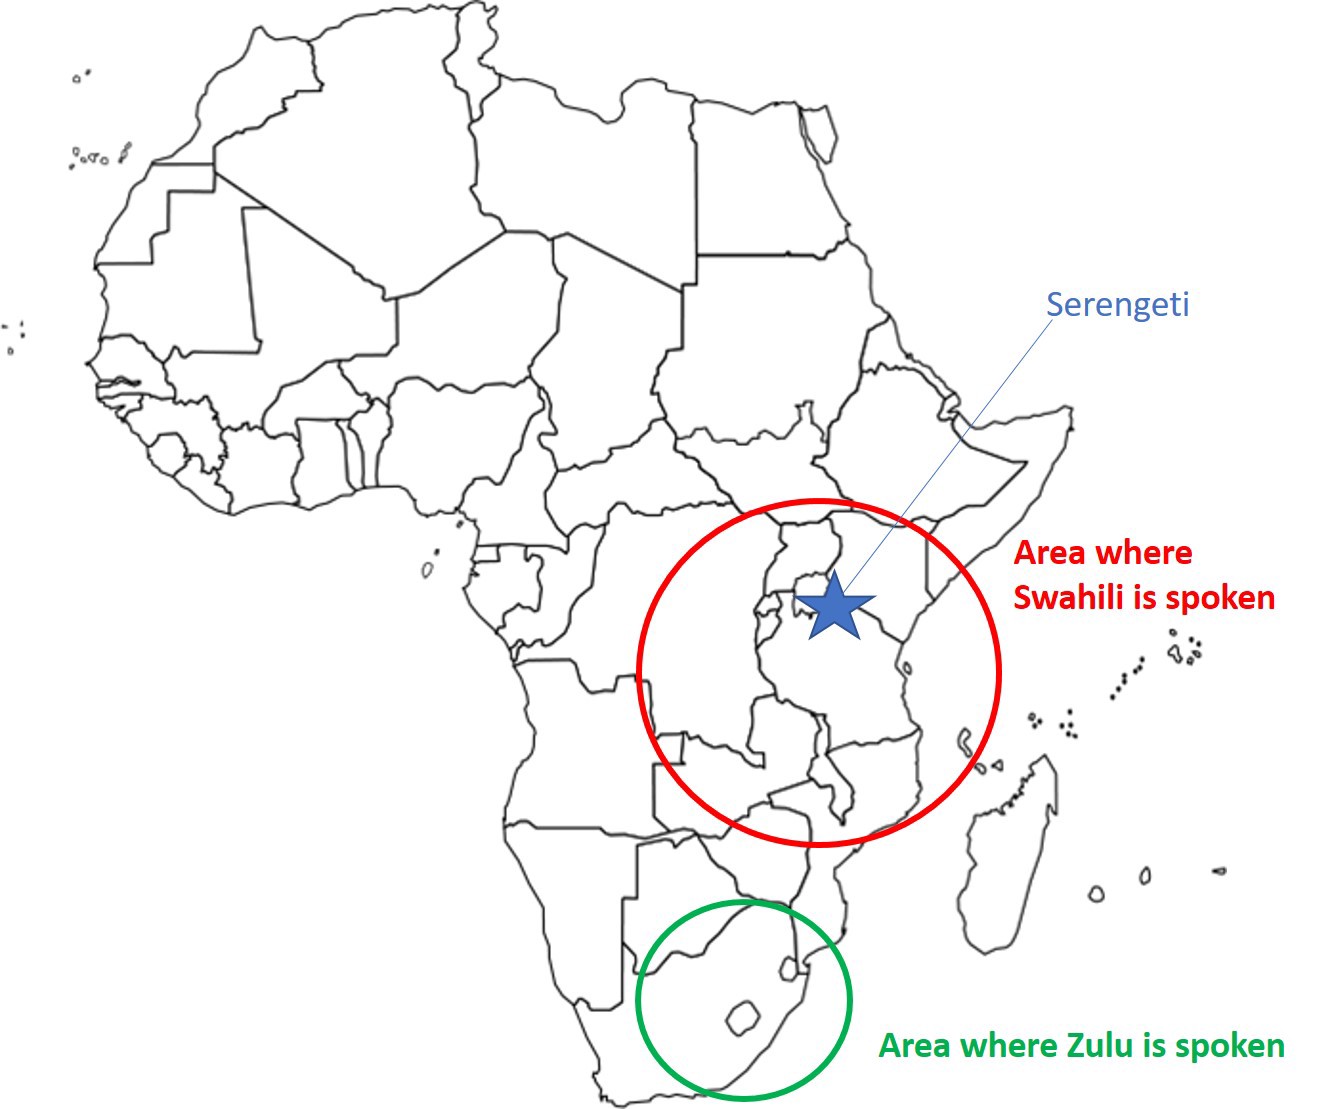 A map of Africa showing regions where Swahili is spoken (Tanzania, Uganda, Rwanda, Burundi, Kenya, some parts of Malawi, Somalia, Zambia, Mozambique, and the Democratic Republic of the Congo) and regions where Zulu is spoken (South Africa and parts of Zimbabwe)